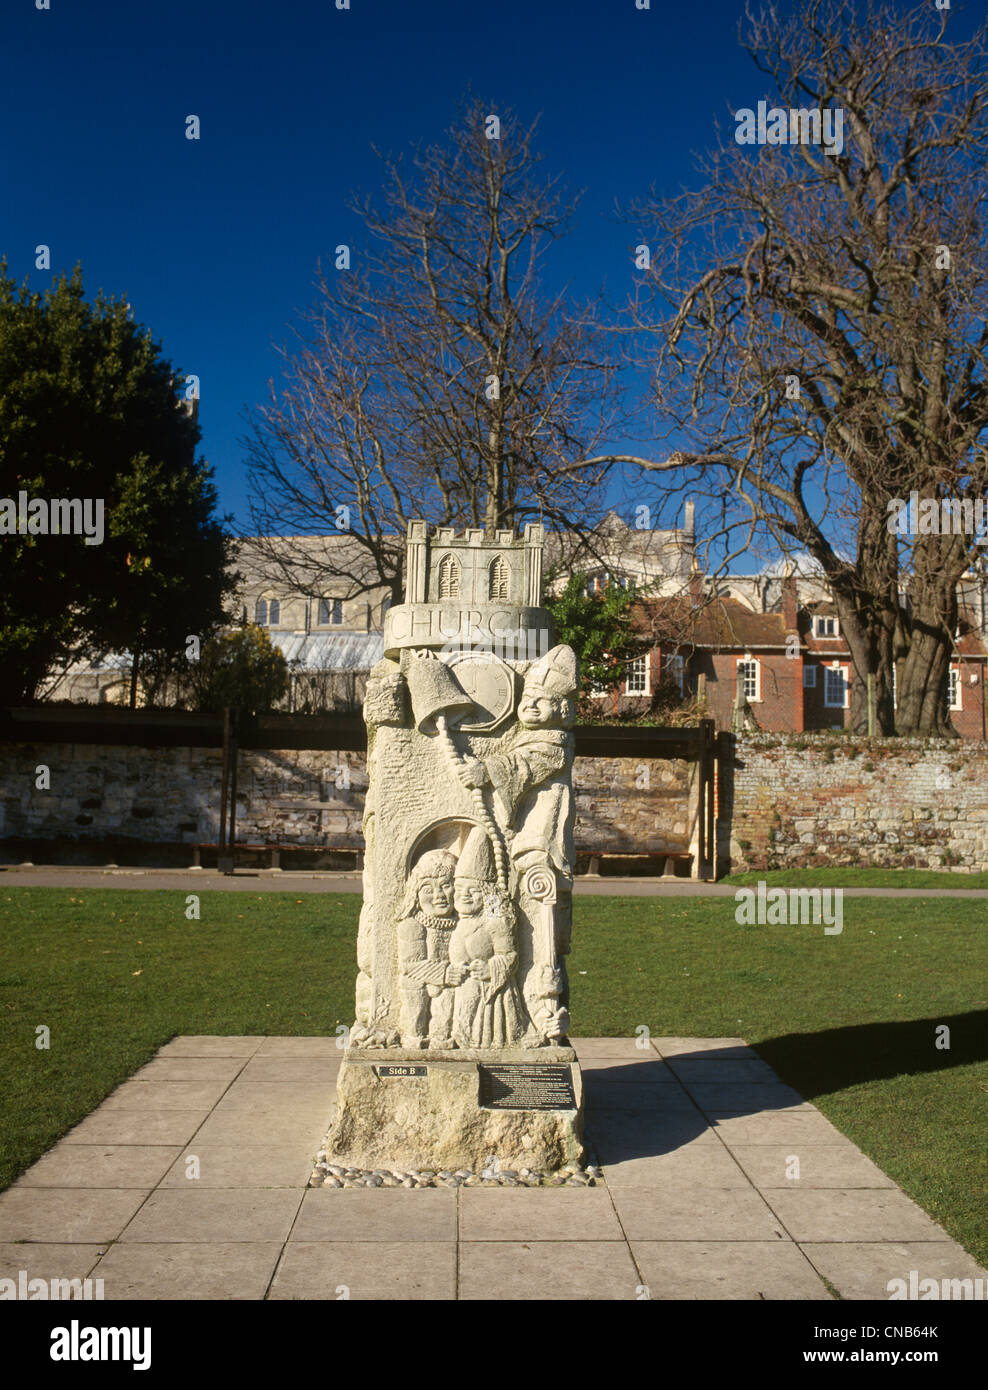 Christchurch Dorset Priory Gardens Sculpture Stock Photo